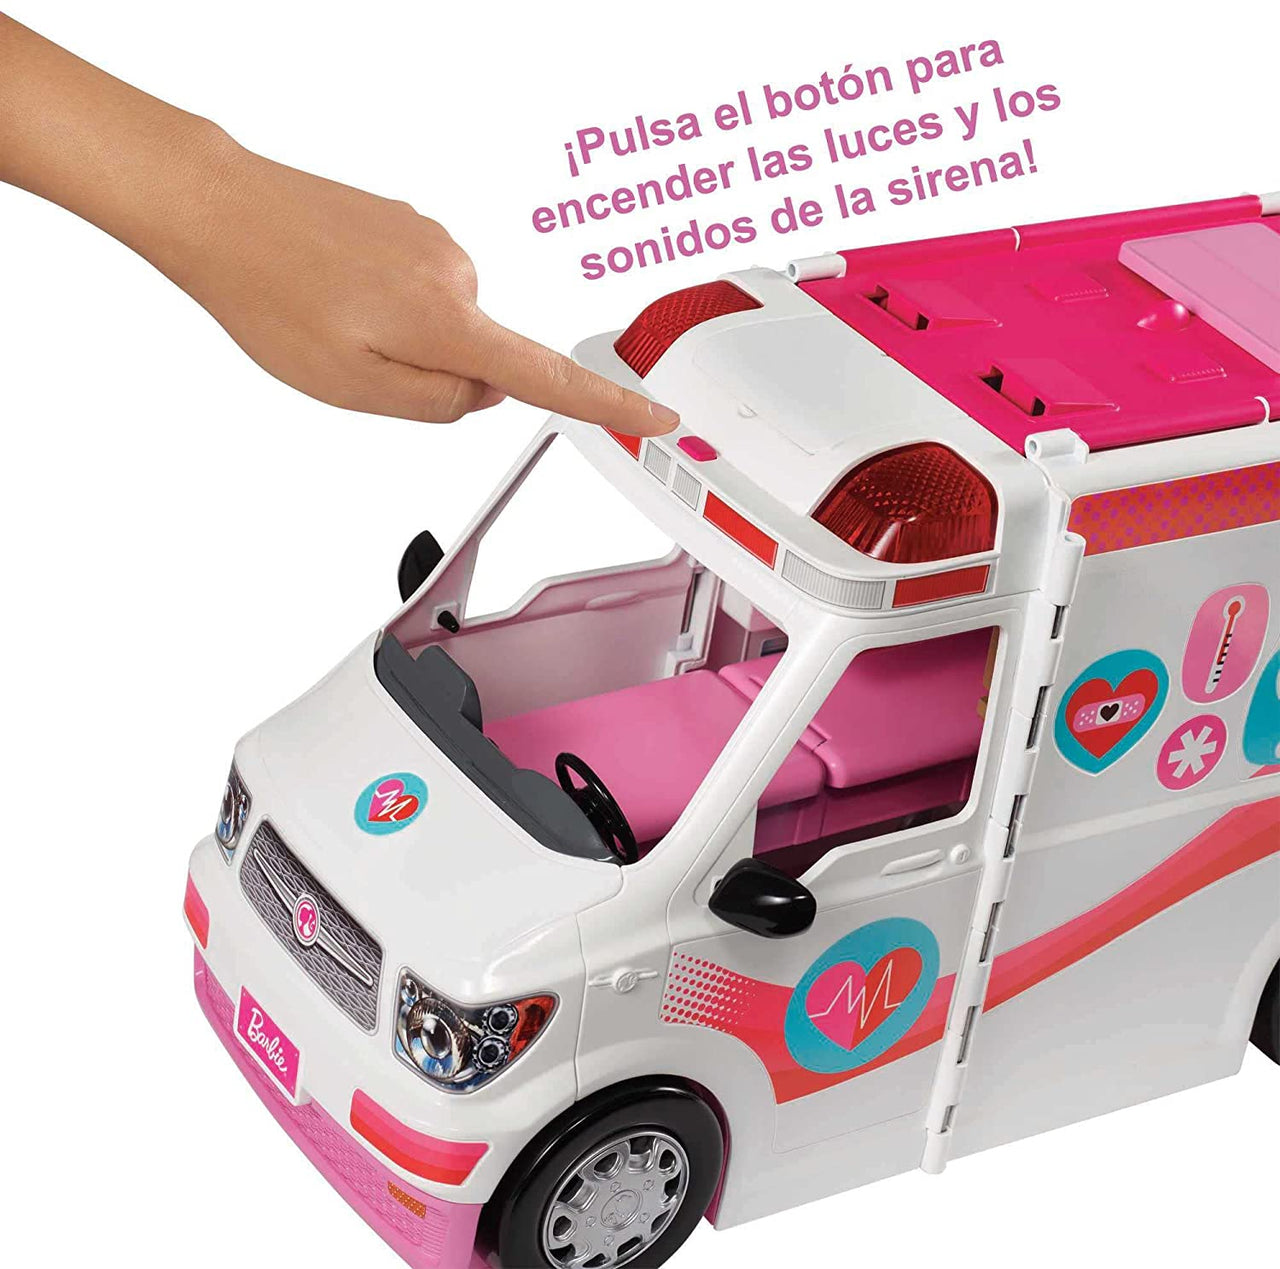 Barbie Care Clinic Vehicle